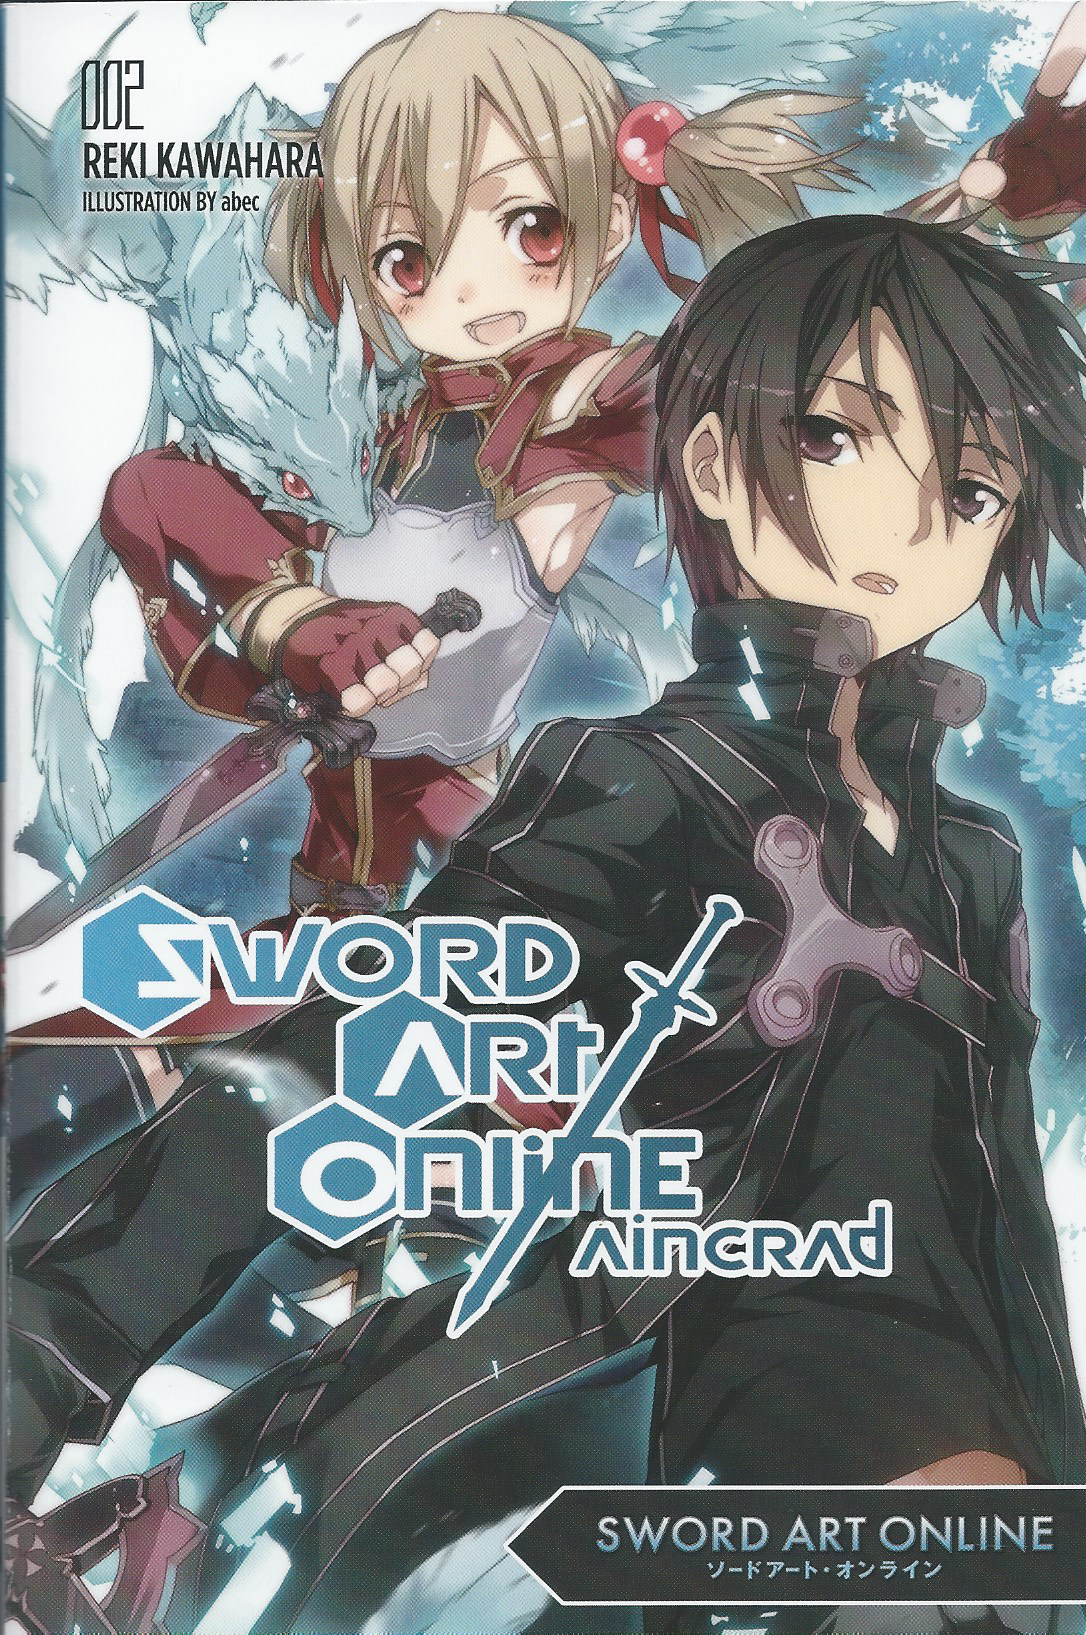 Sword Art Online Novels Get Manga About Aincrad Arc - News - Anime